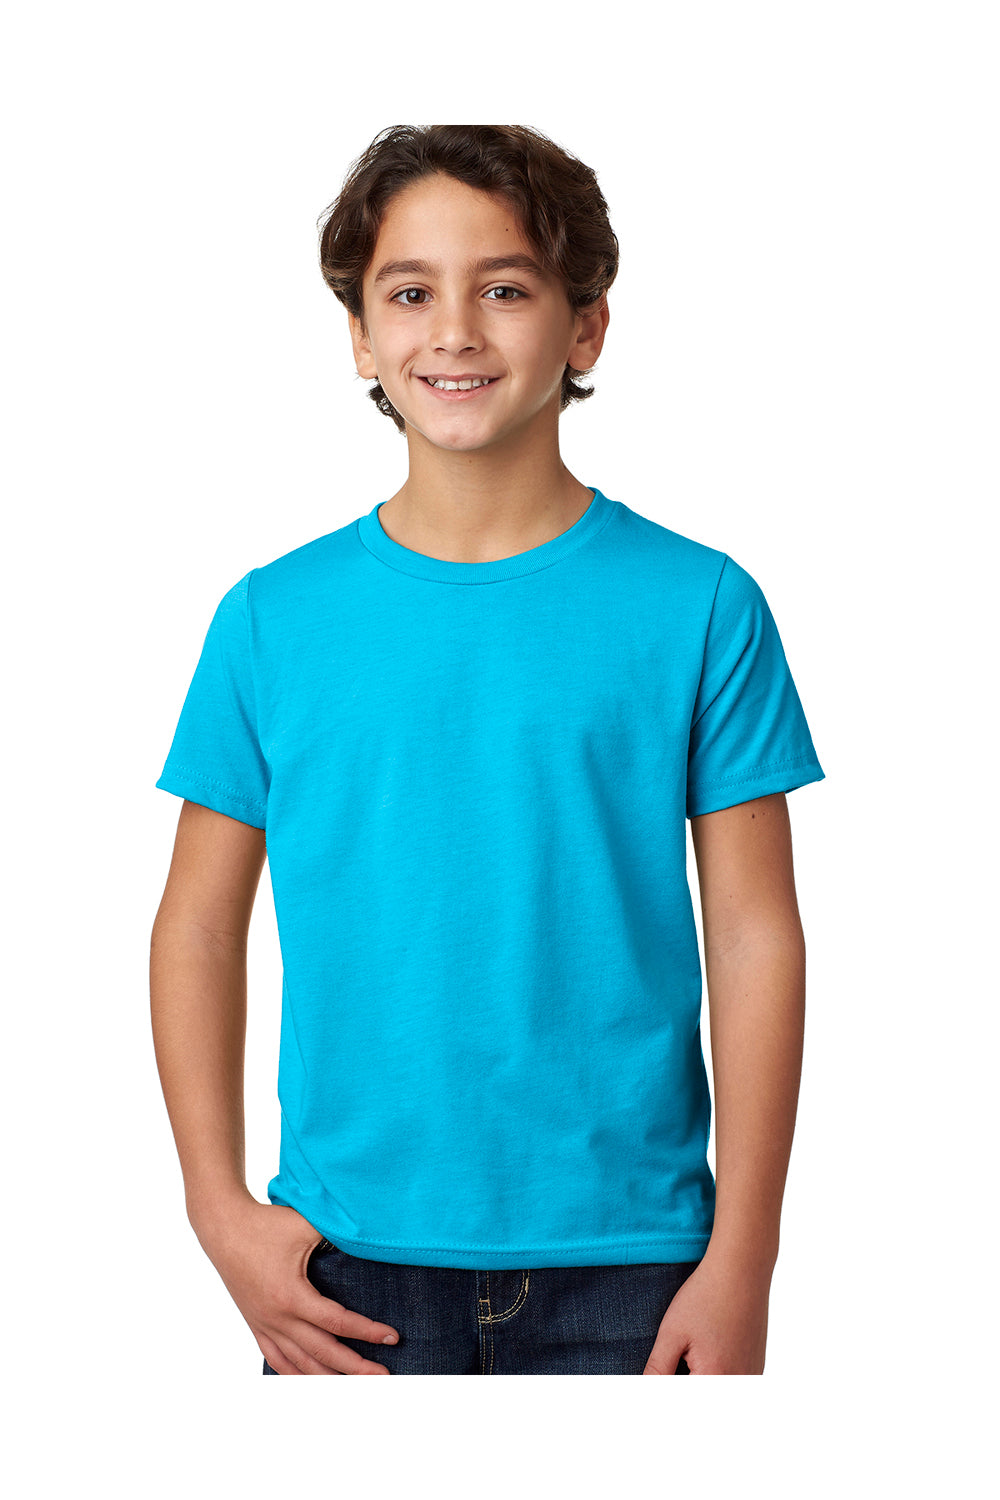 Next Level 3312 Youth CVC Jersey Short Sleeve Crewneck T-Shirt Turquoise Blue Front